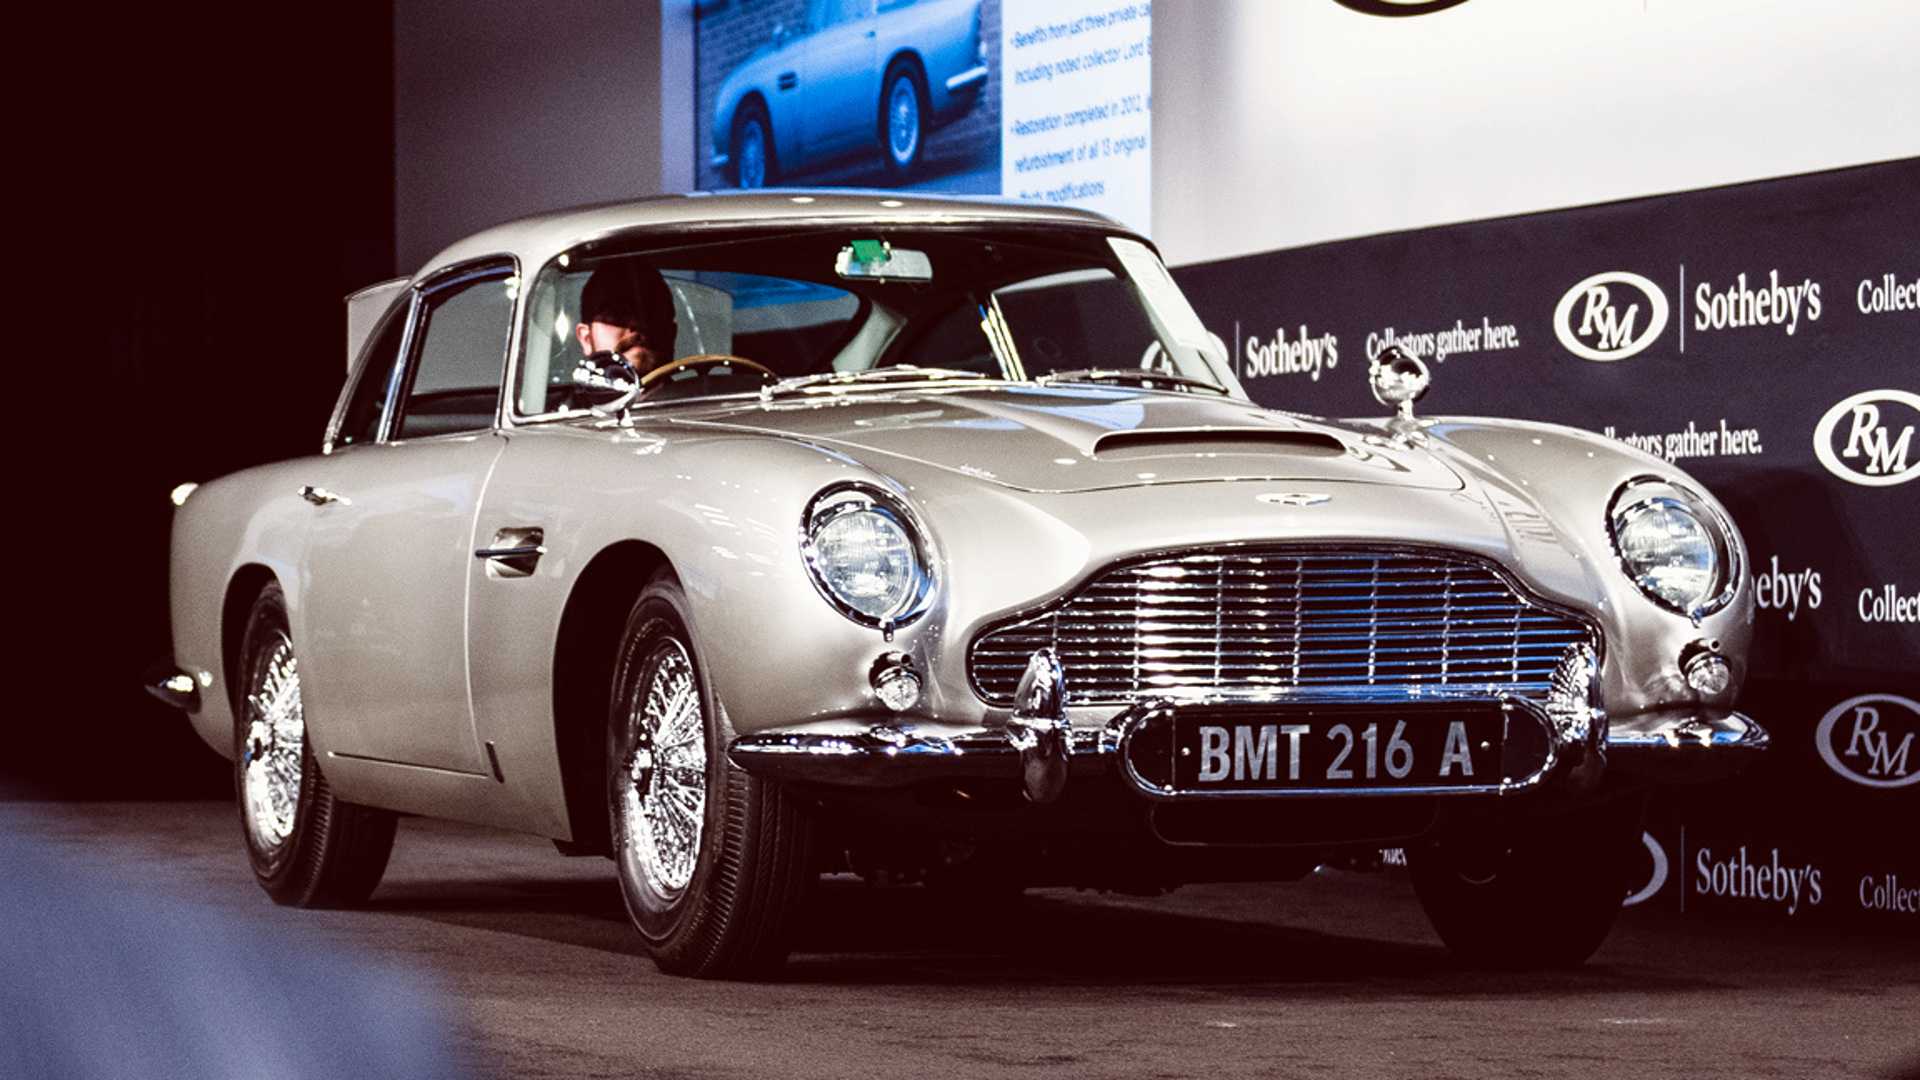 James Bond Aston Martin Fetches Record Price of USD 6.4 Million at Auction